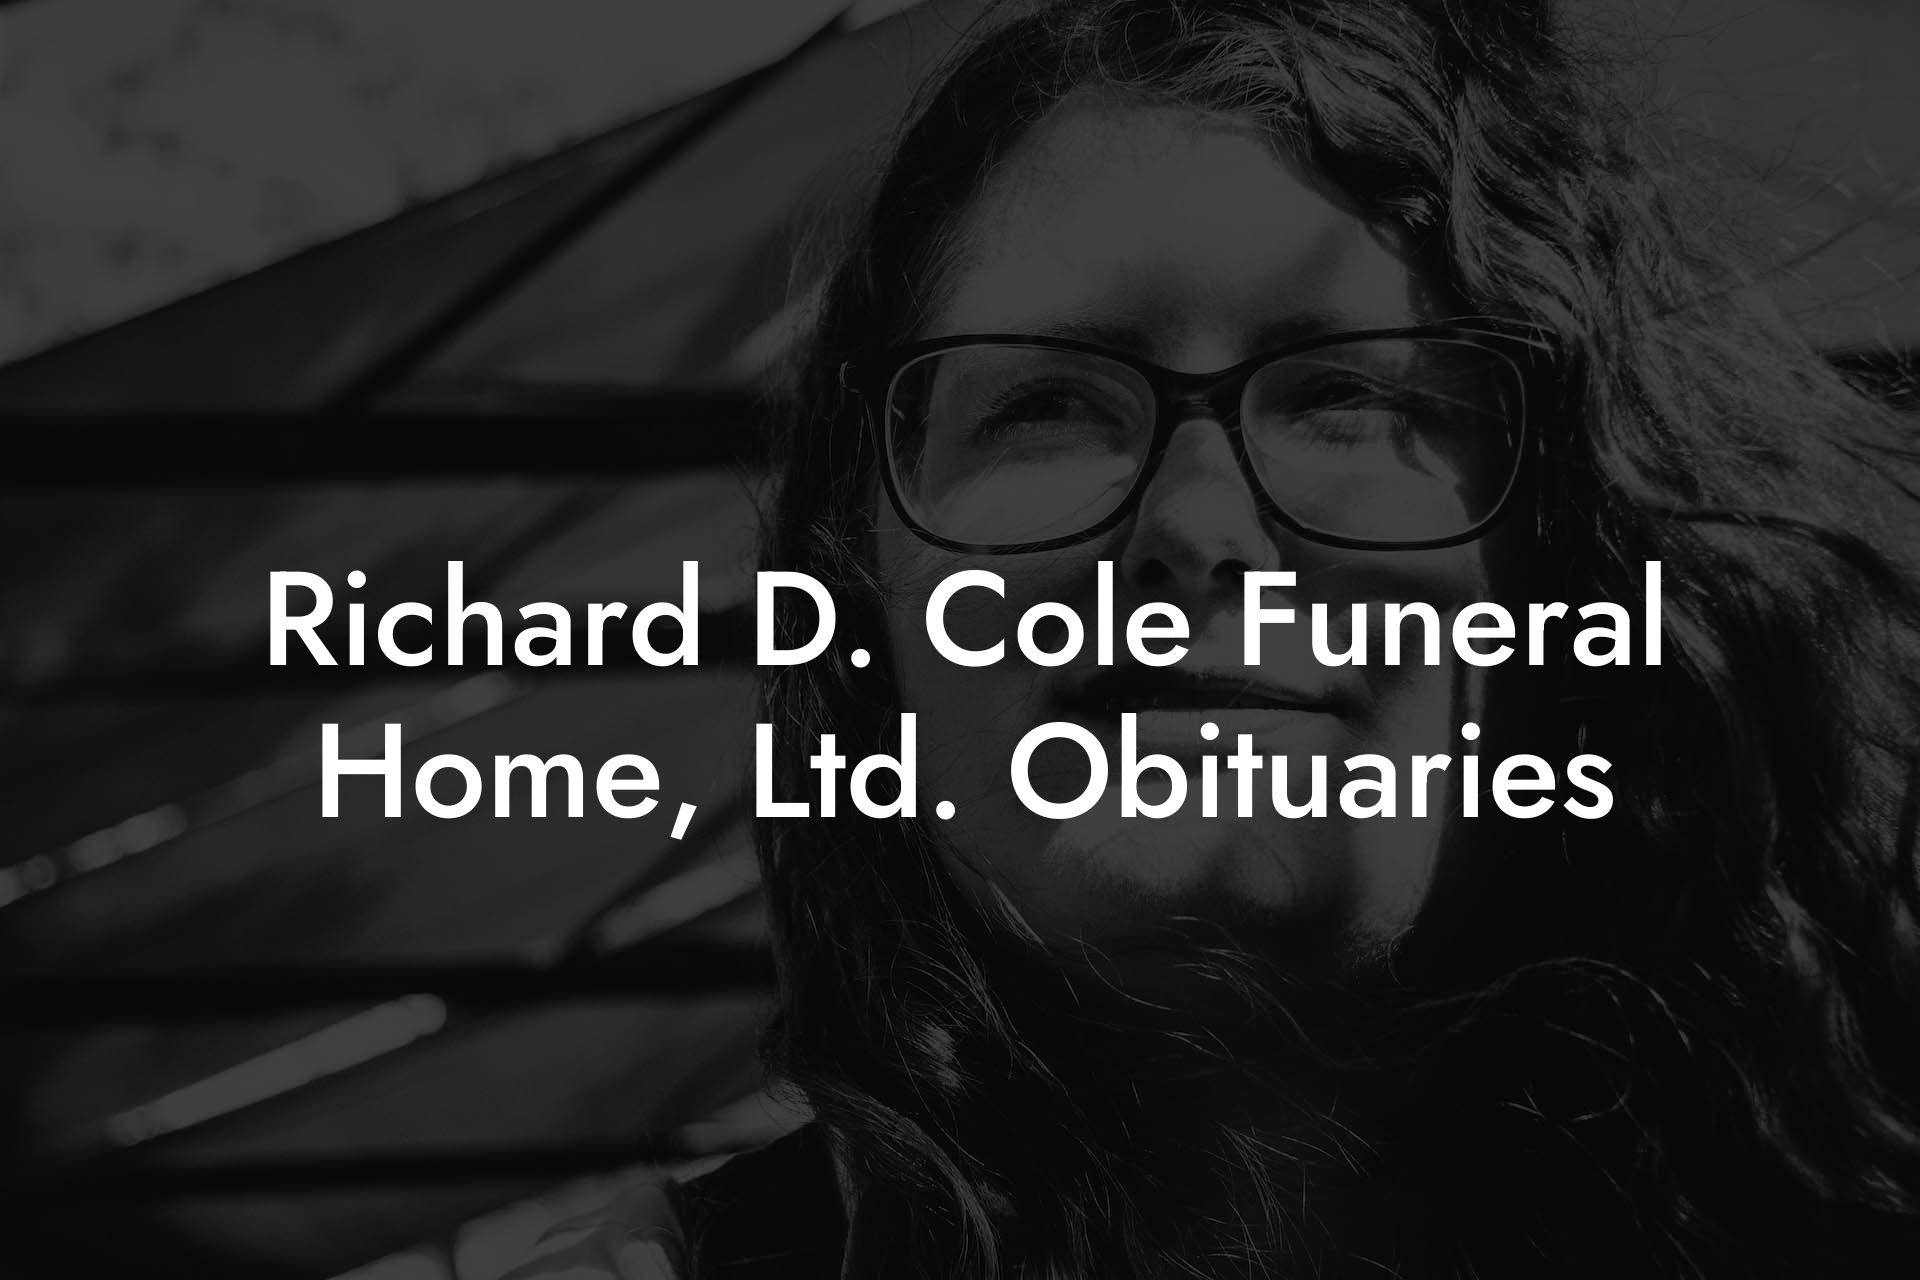 Richard D. Cole Funeral Home, Ltd. Obituaries